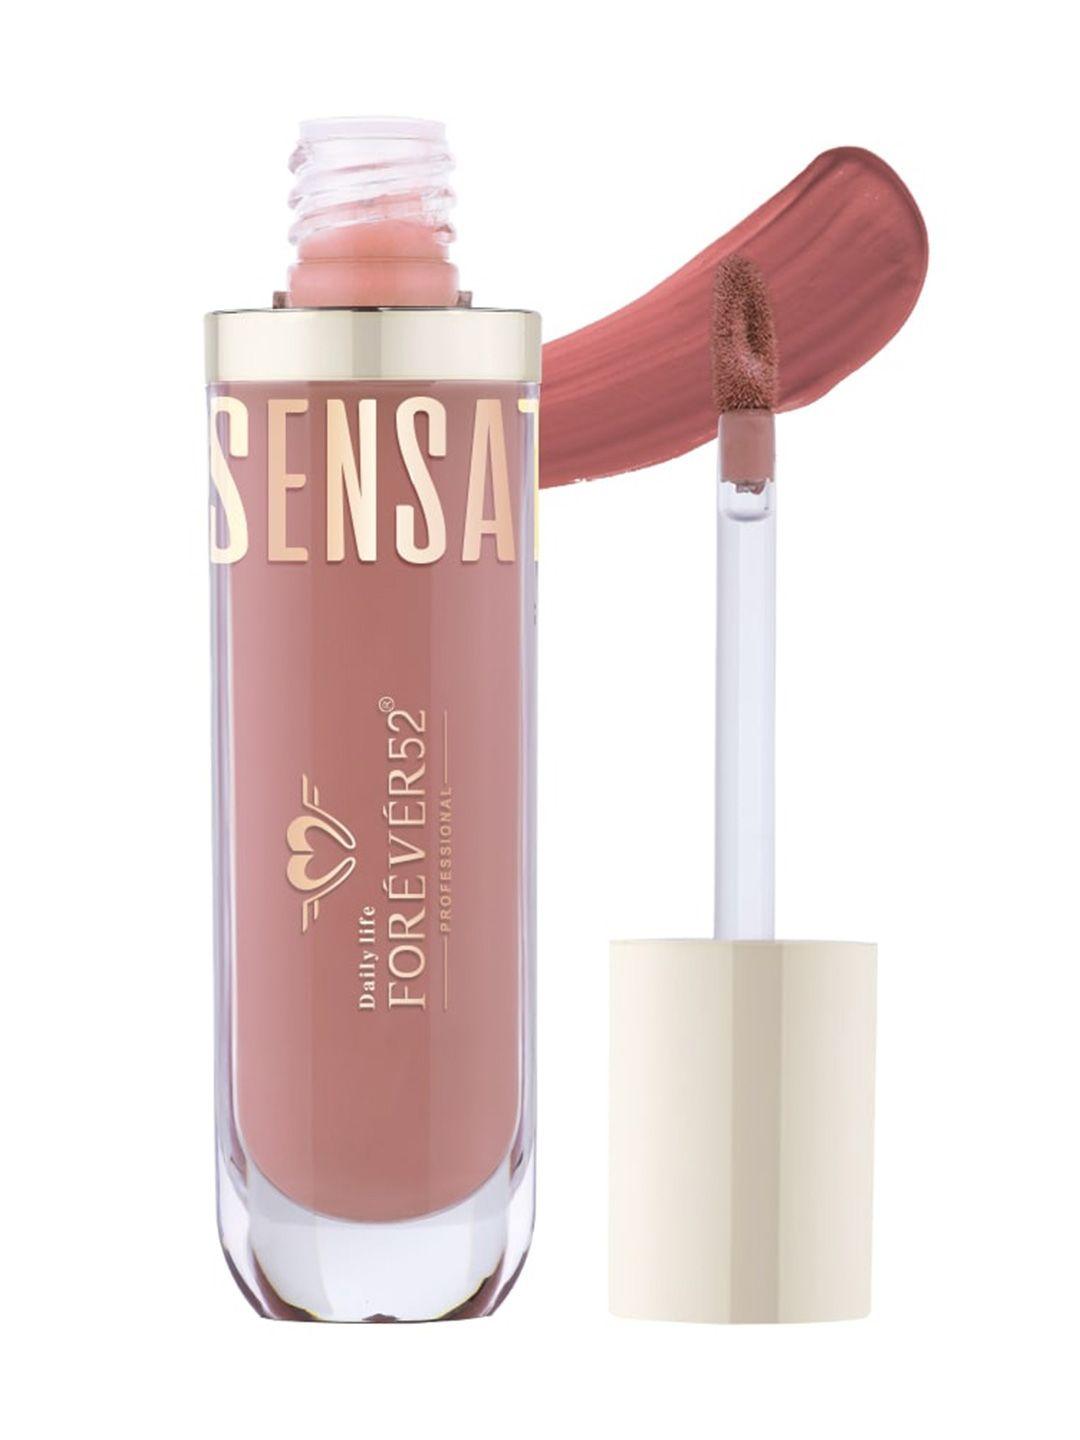 daily life forever52 sensational long lasting liquid lipstick 6ml - creamy caramel 010